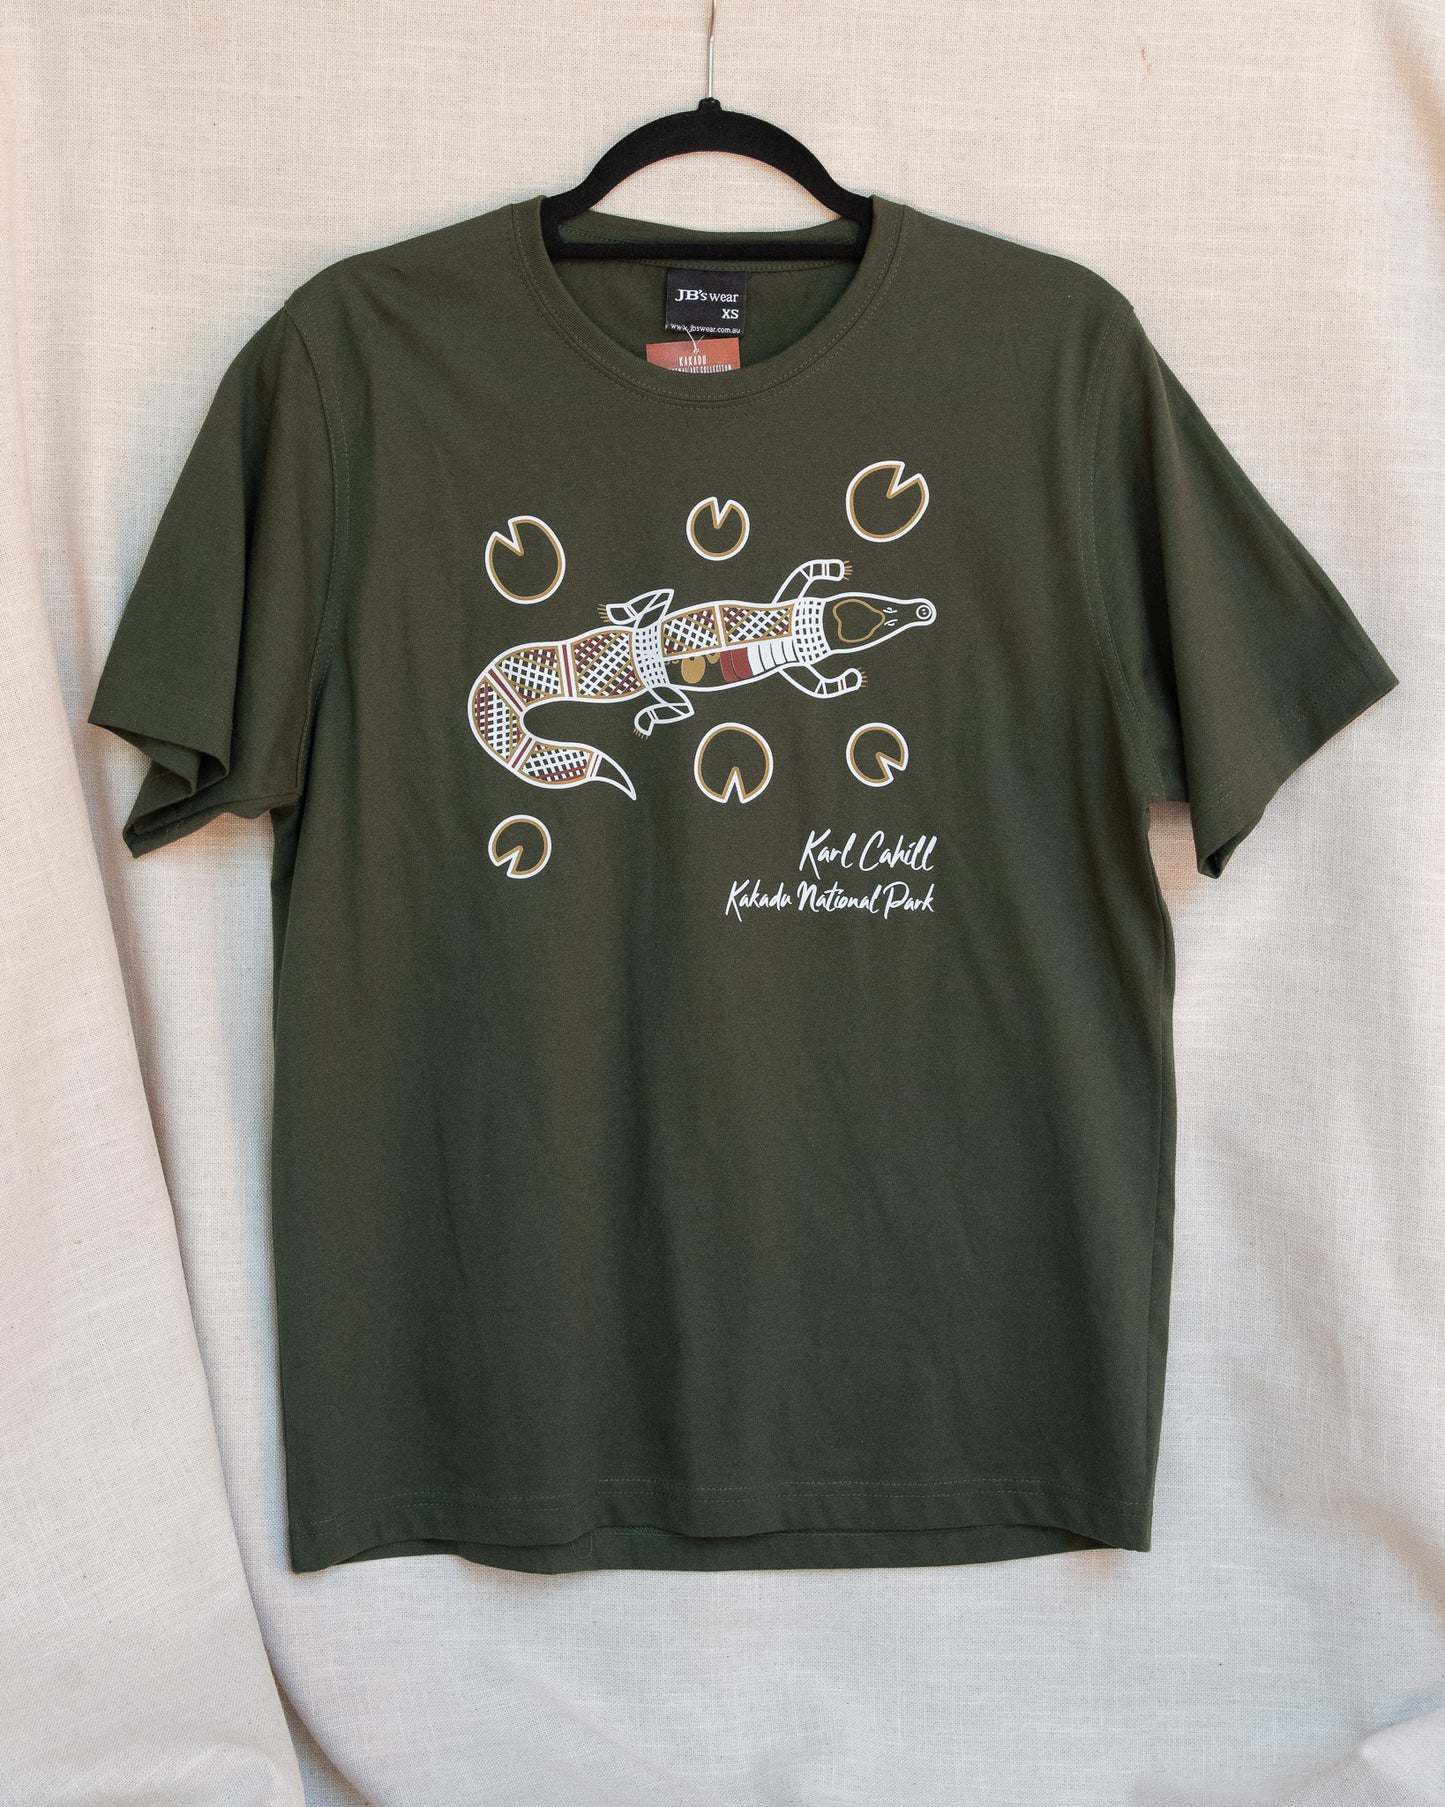 Ginga tshirt from Kakadu designed by Karl Cahill